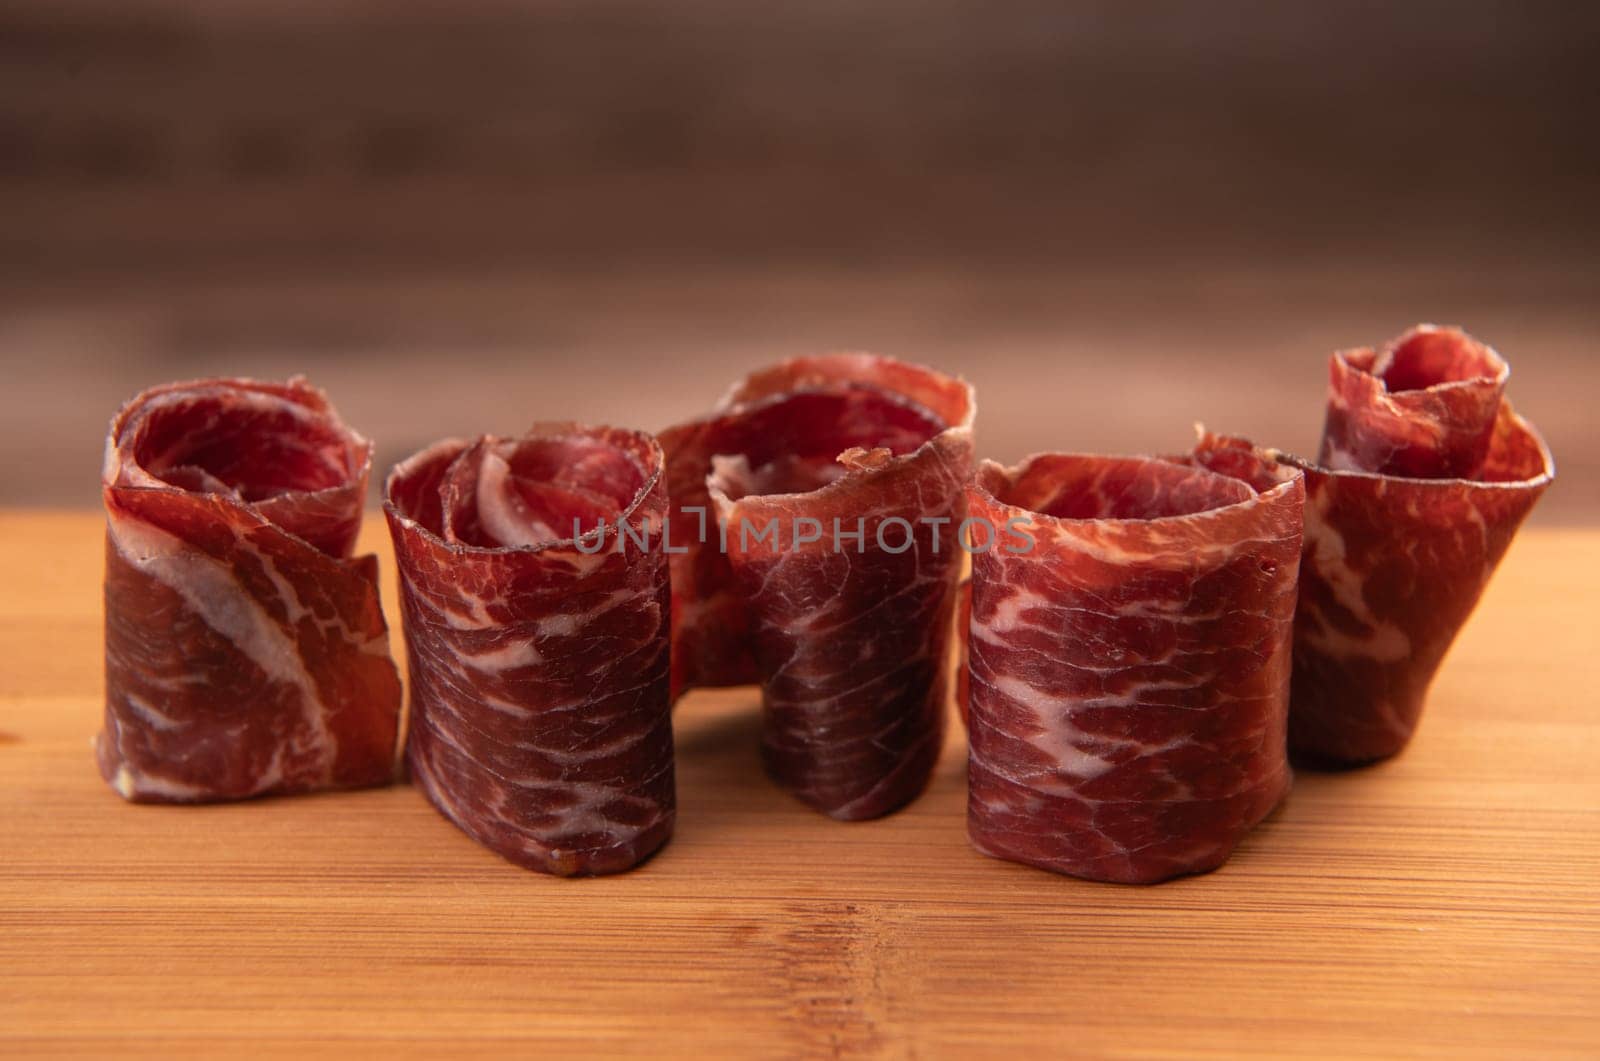 Dry-cured Spanish ham, Serrano ham, Bellota ham, Italian prosciutto crudo or Parma ham, wagyu slice. High quality photo